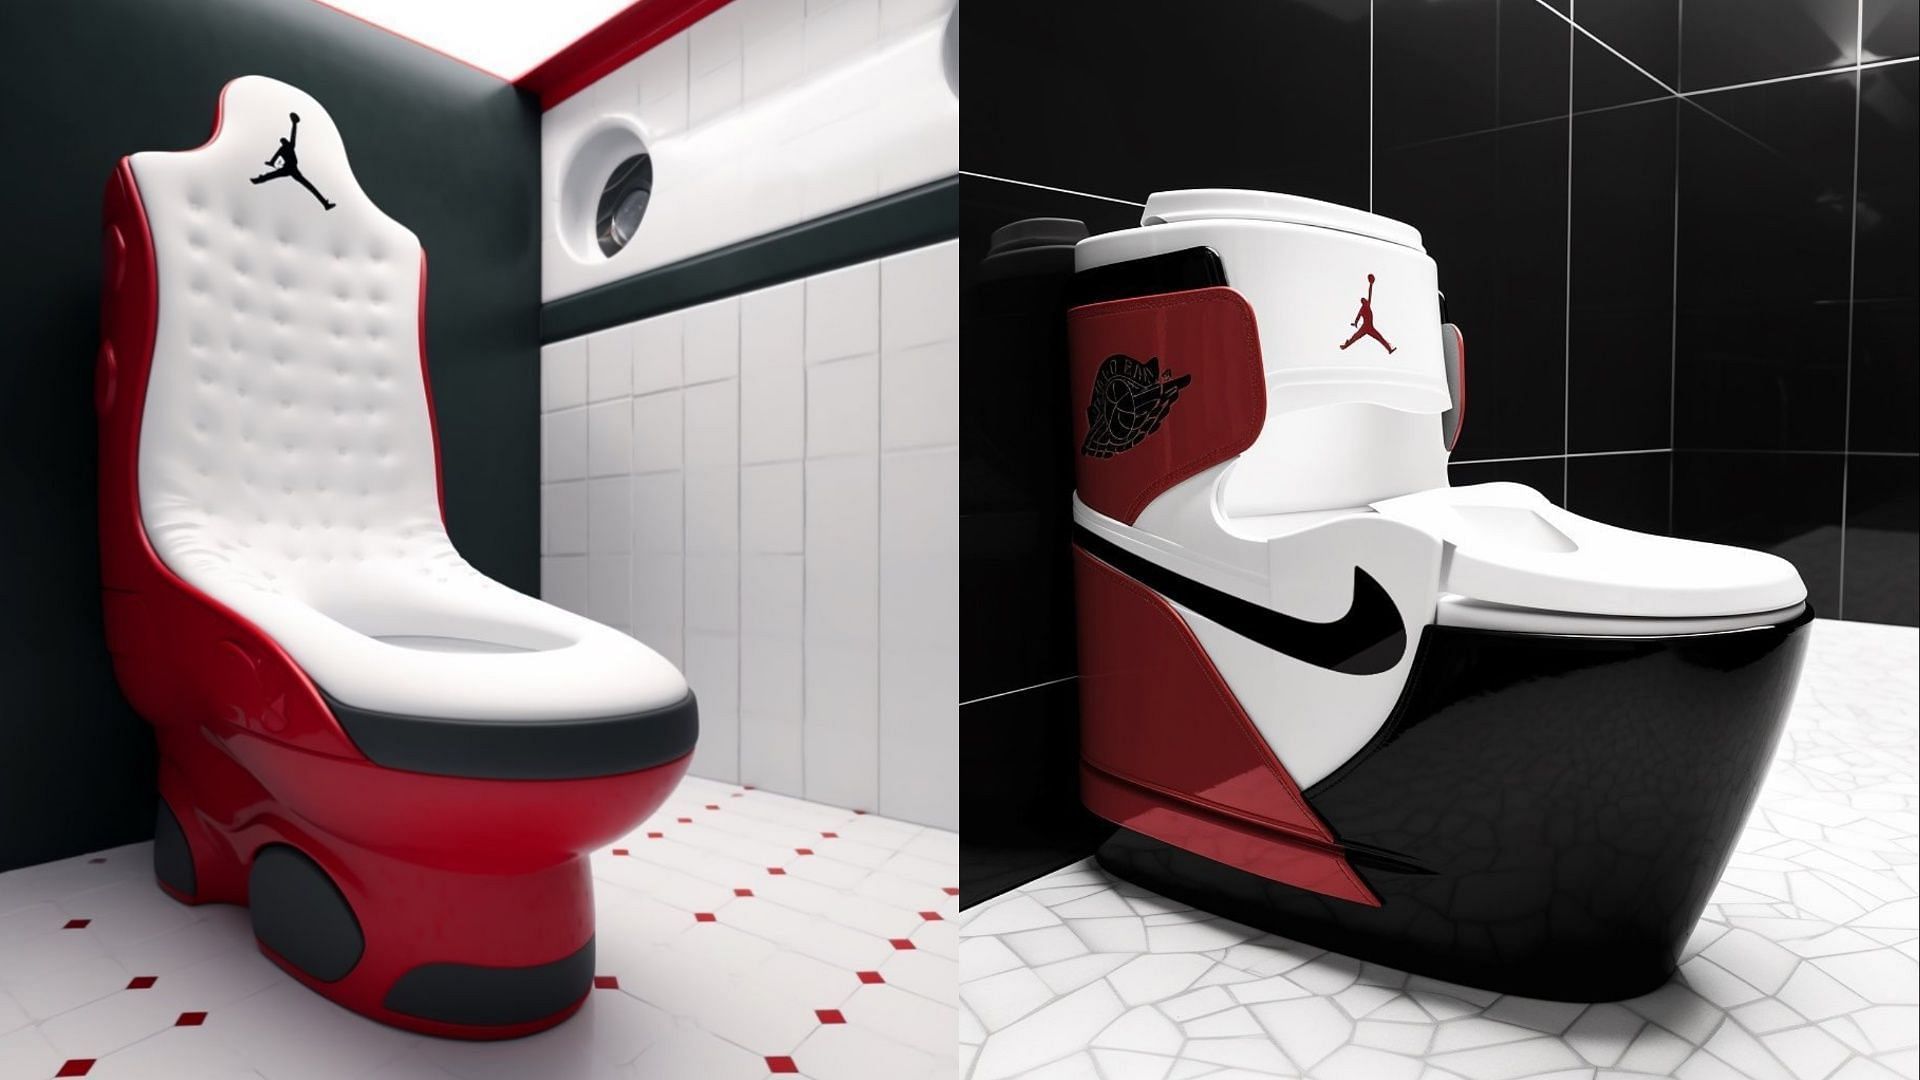 AI-generated images of Air Jordan toilets stun netizens. (Image via Twitter/@ComplexSneakers)